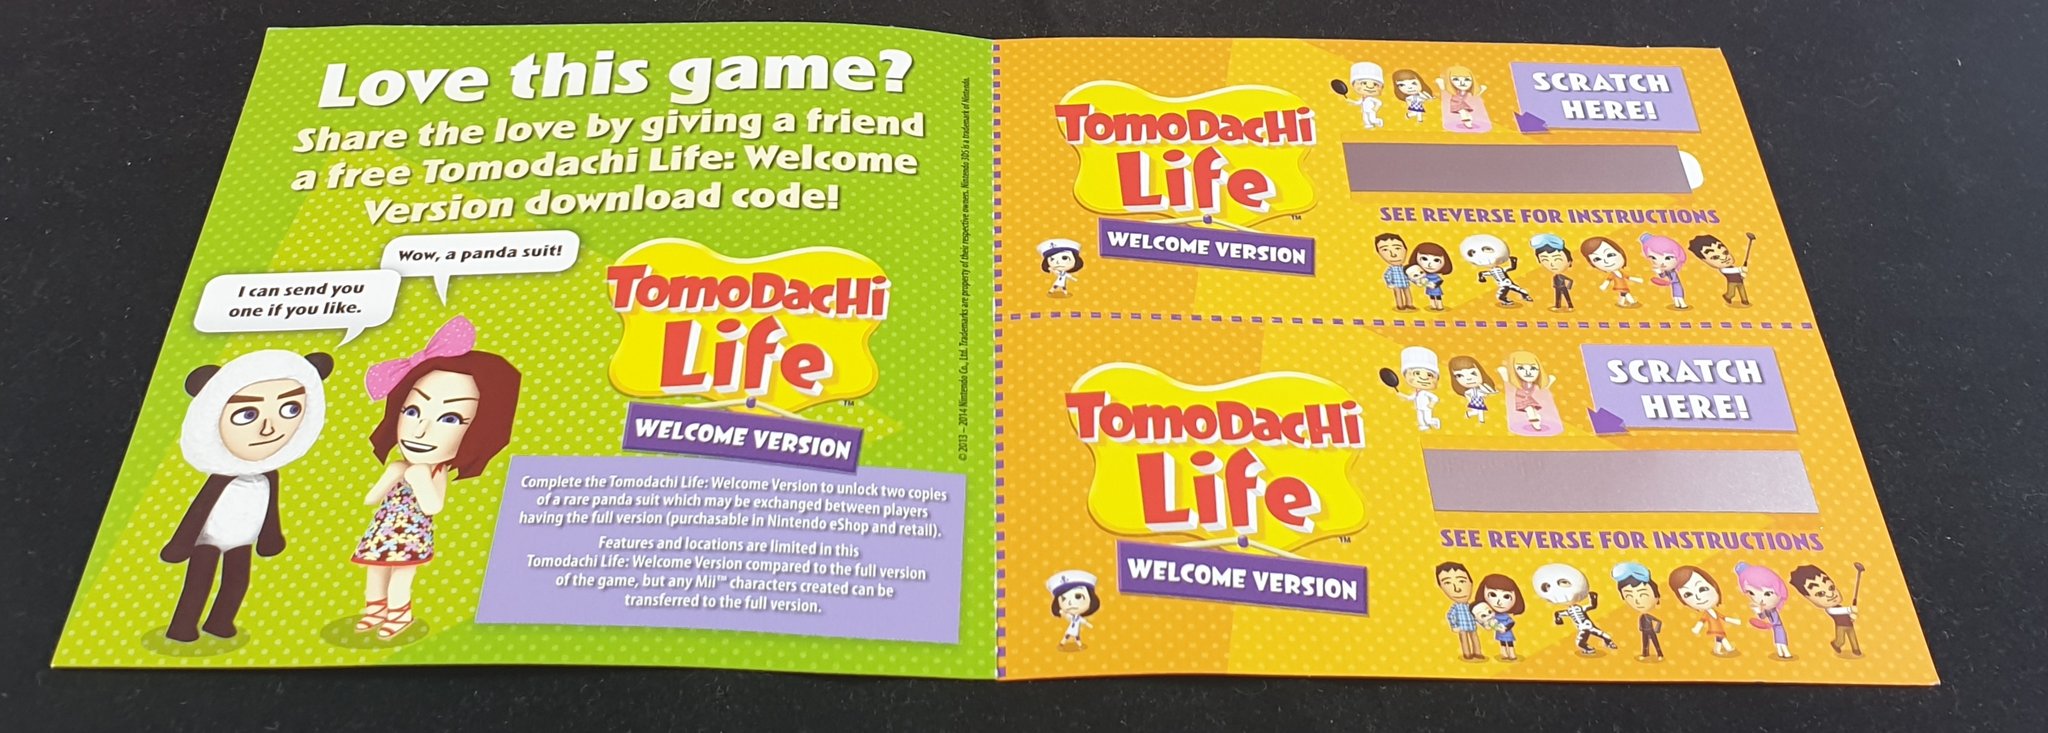 tomodachi life download code